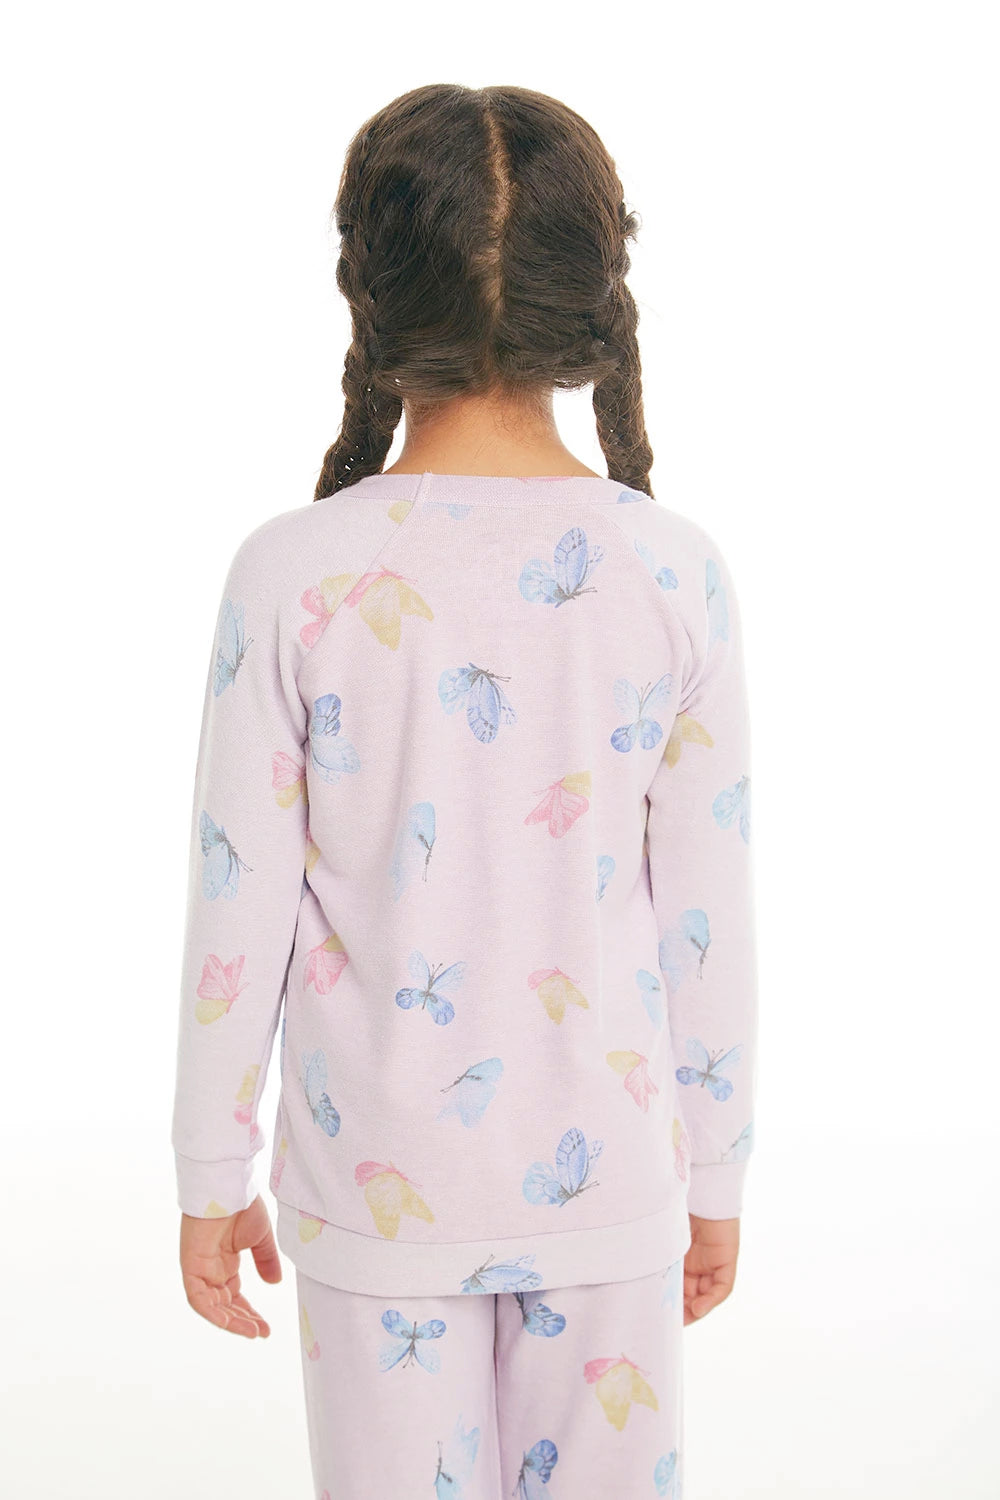 CHASER KIDS - Girls Cozy Knit Raglan Pullover "Watercolor Butterflies"